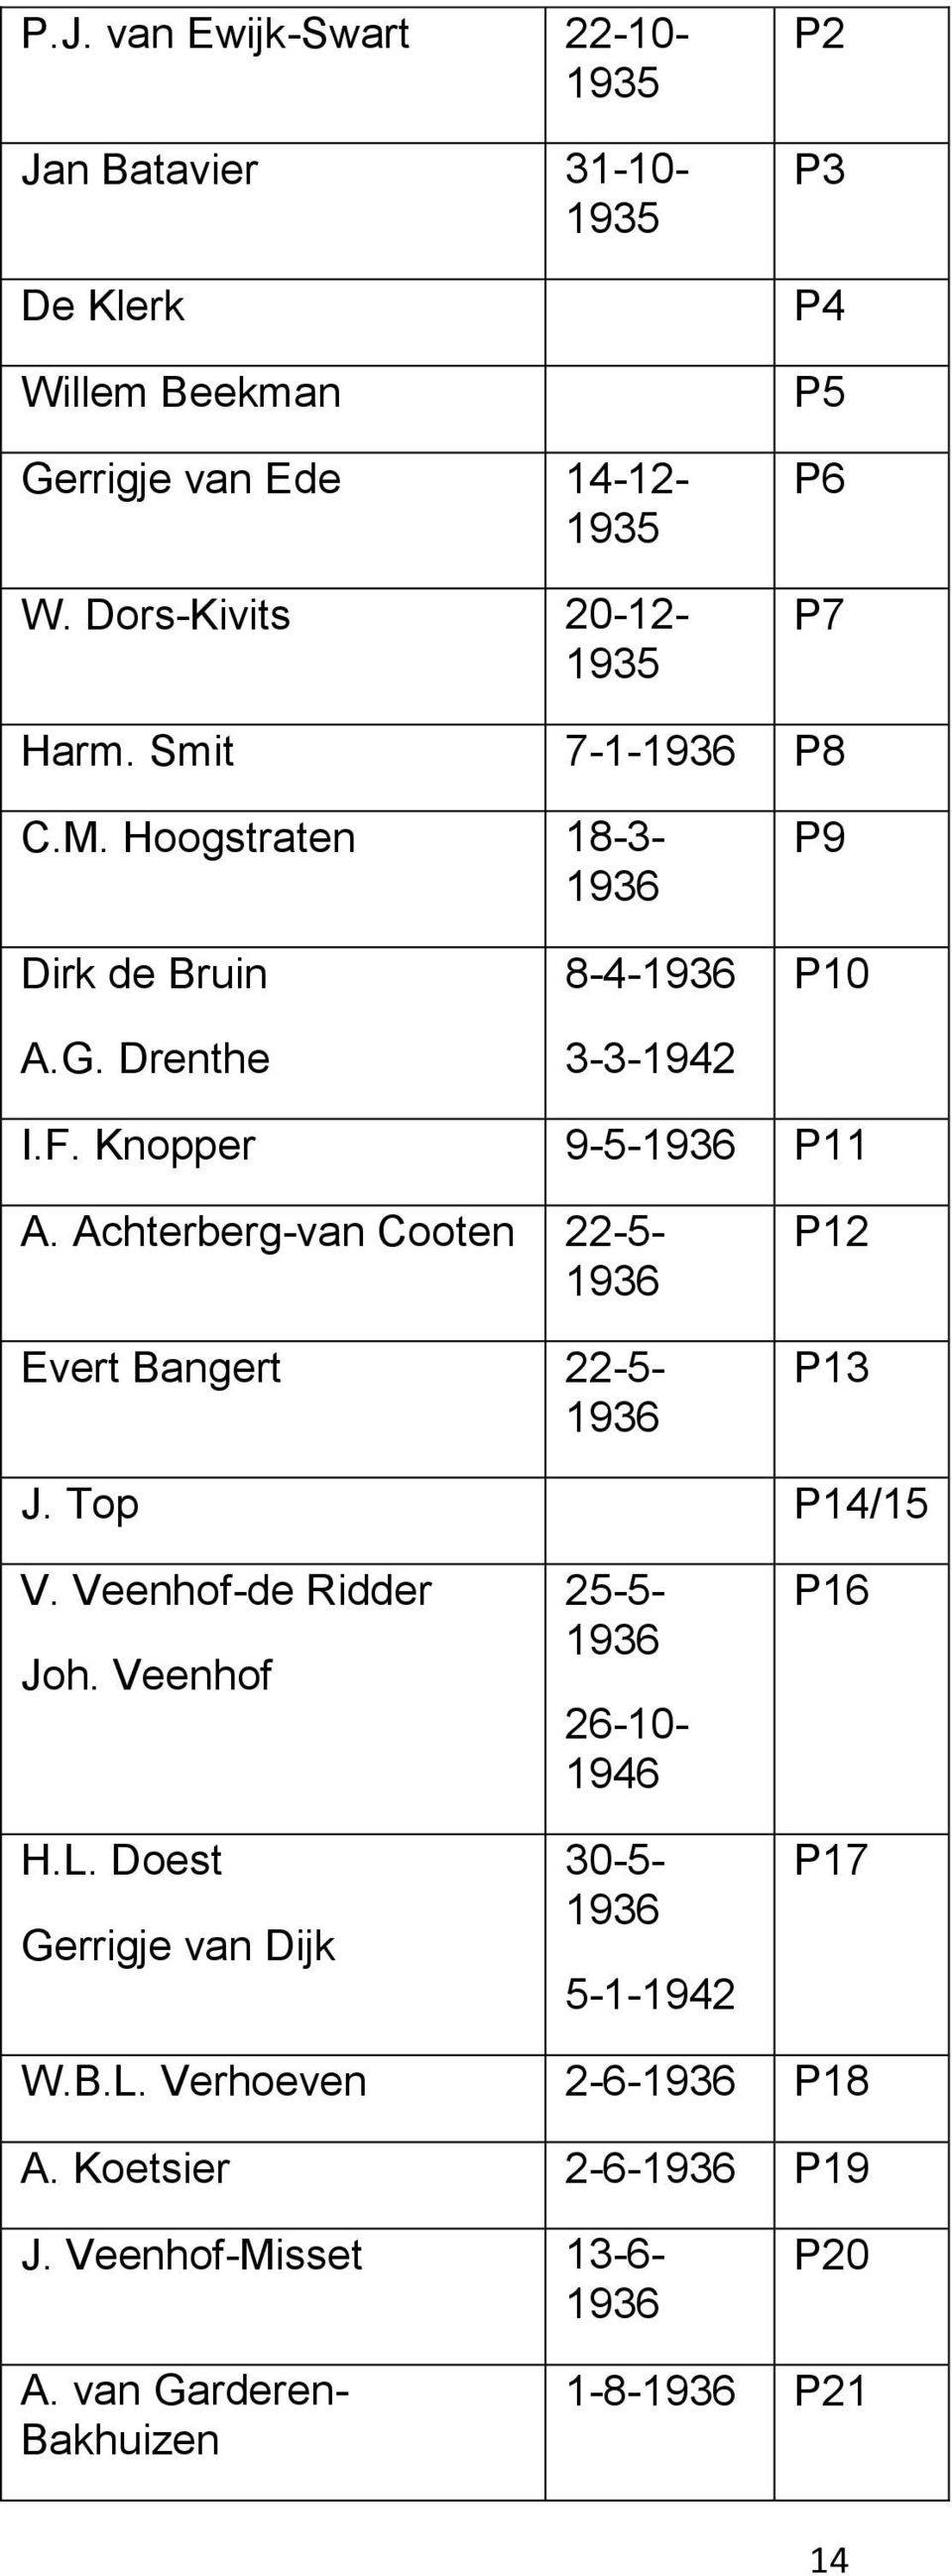 Knopper 9-5- P11 A. Achterberg-van Cooten 22-5- Evert Bangert 22-5- P12 P13 J. Top P14/15 V. Veenhof-de Ridder Joh. Veenhof H.L.